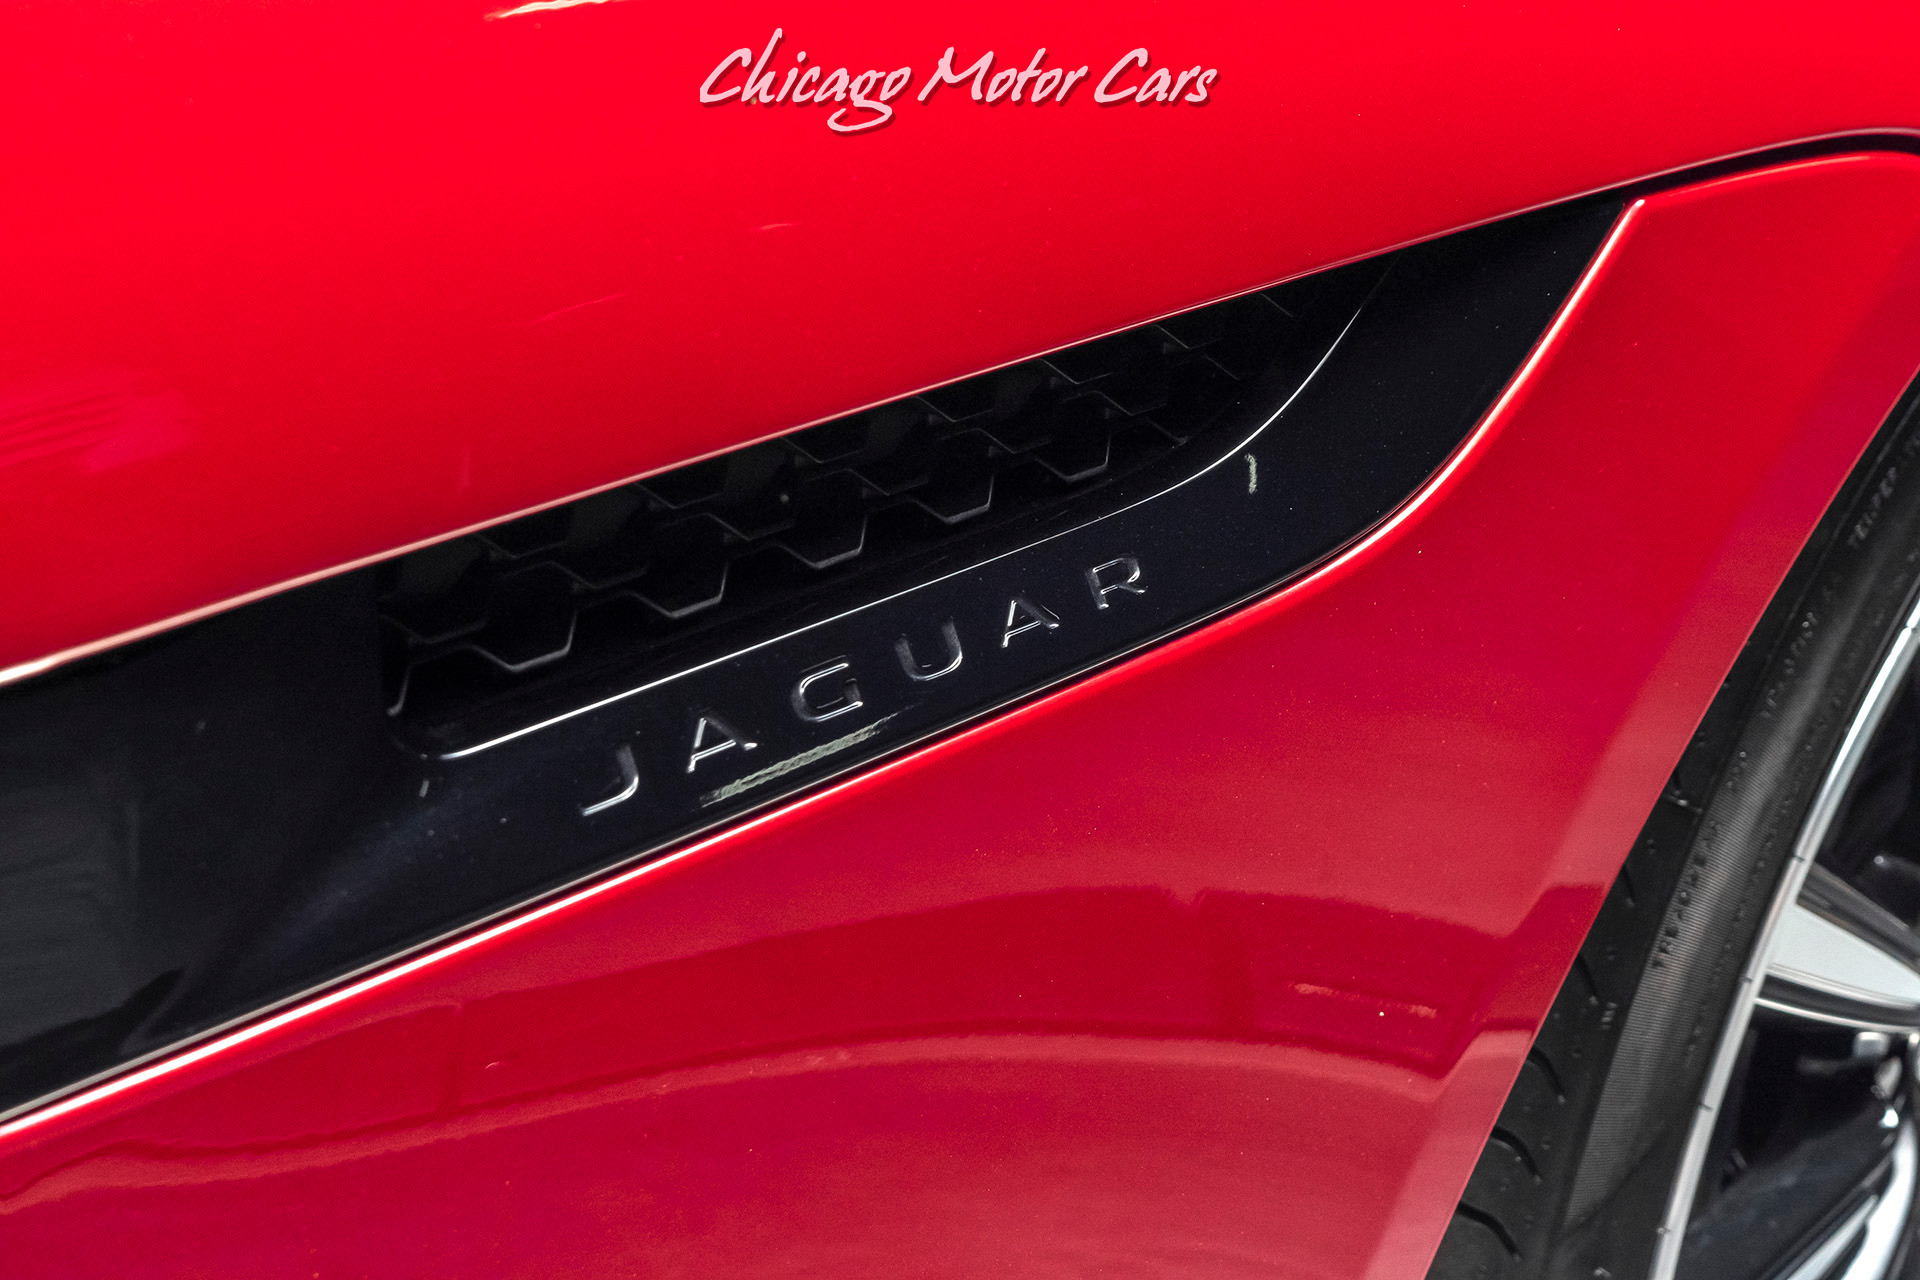 Used 2017 Jaguar F-TYPE Premium-VISION PKG-Only 22K Miles ...